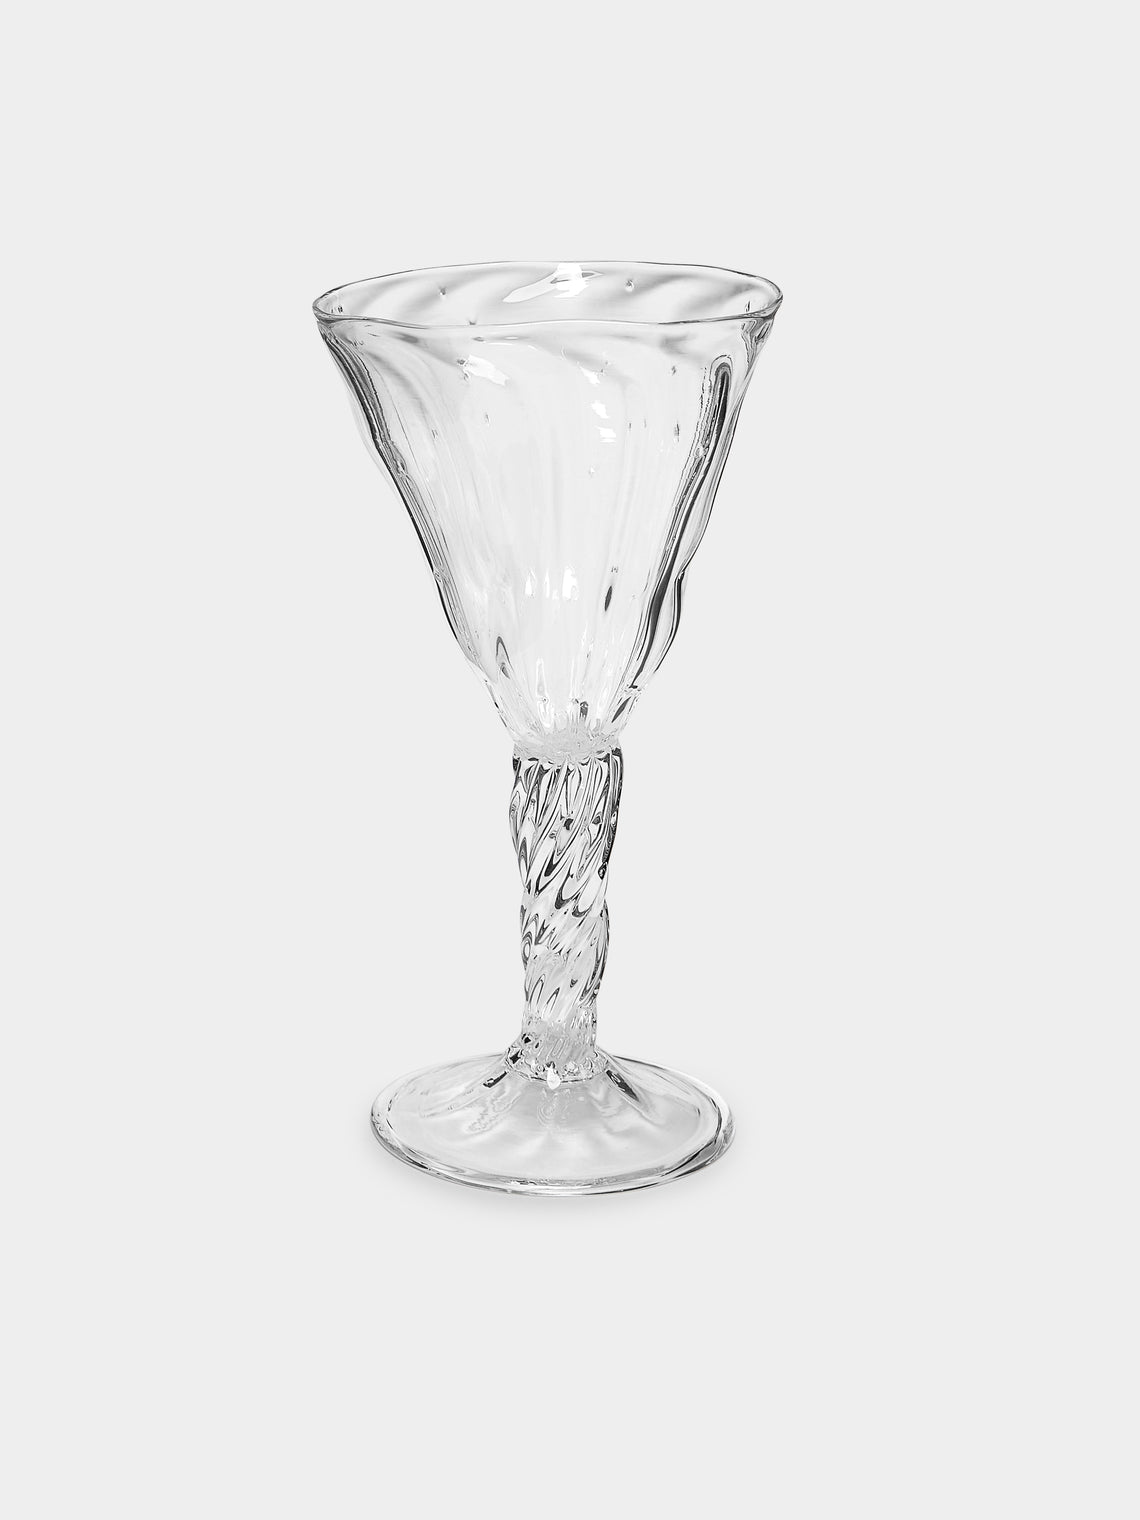 Alexander Kirkeby - Hand-Blown Crystal Wine Glass -  - ABASK - 